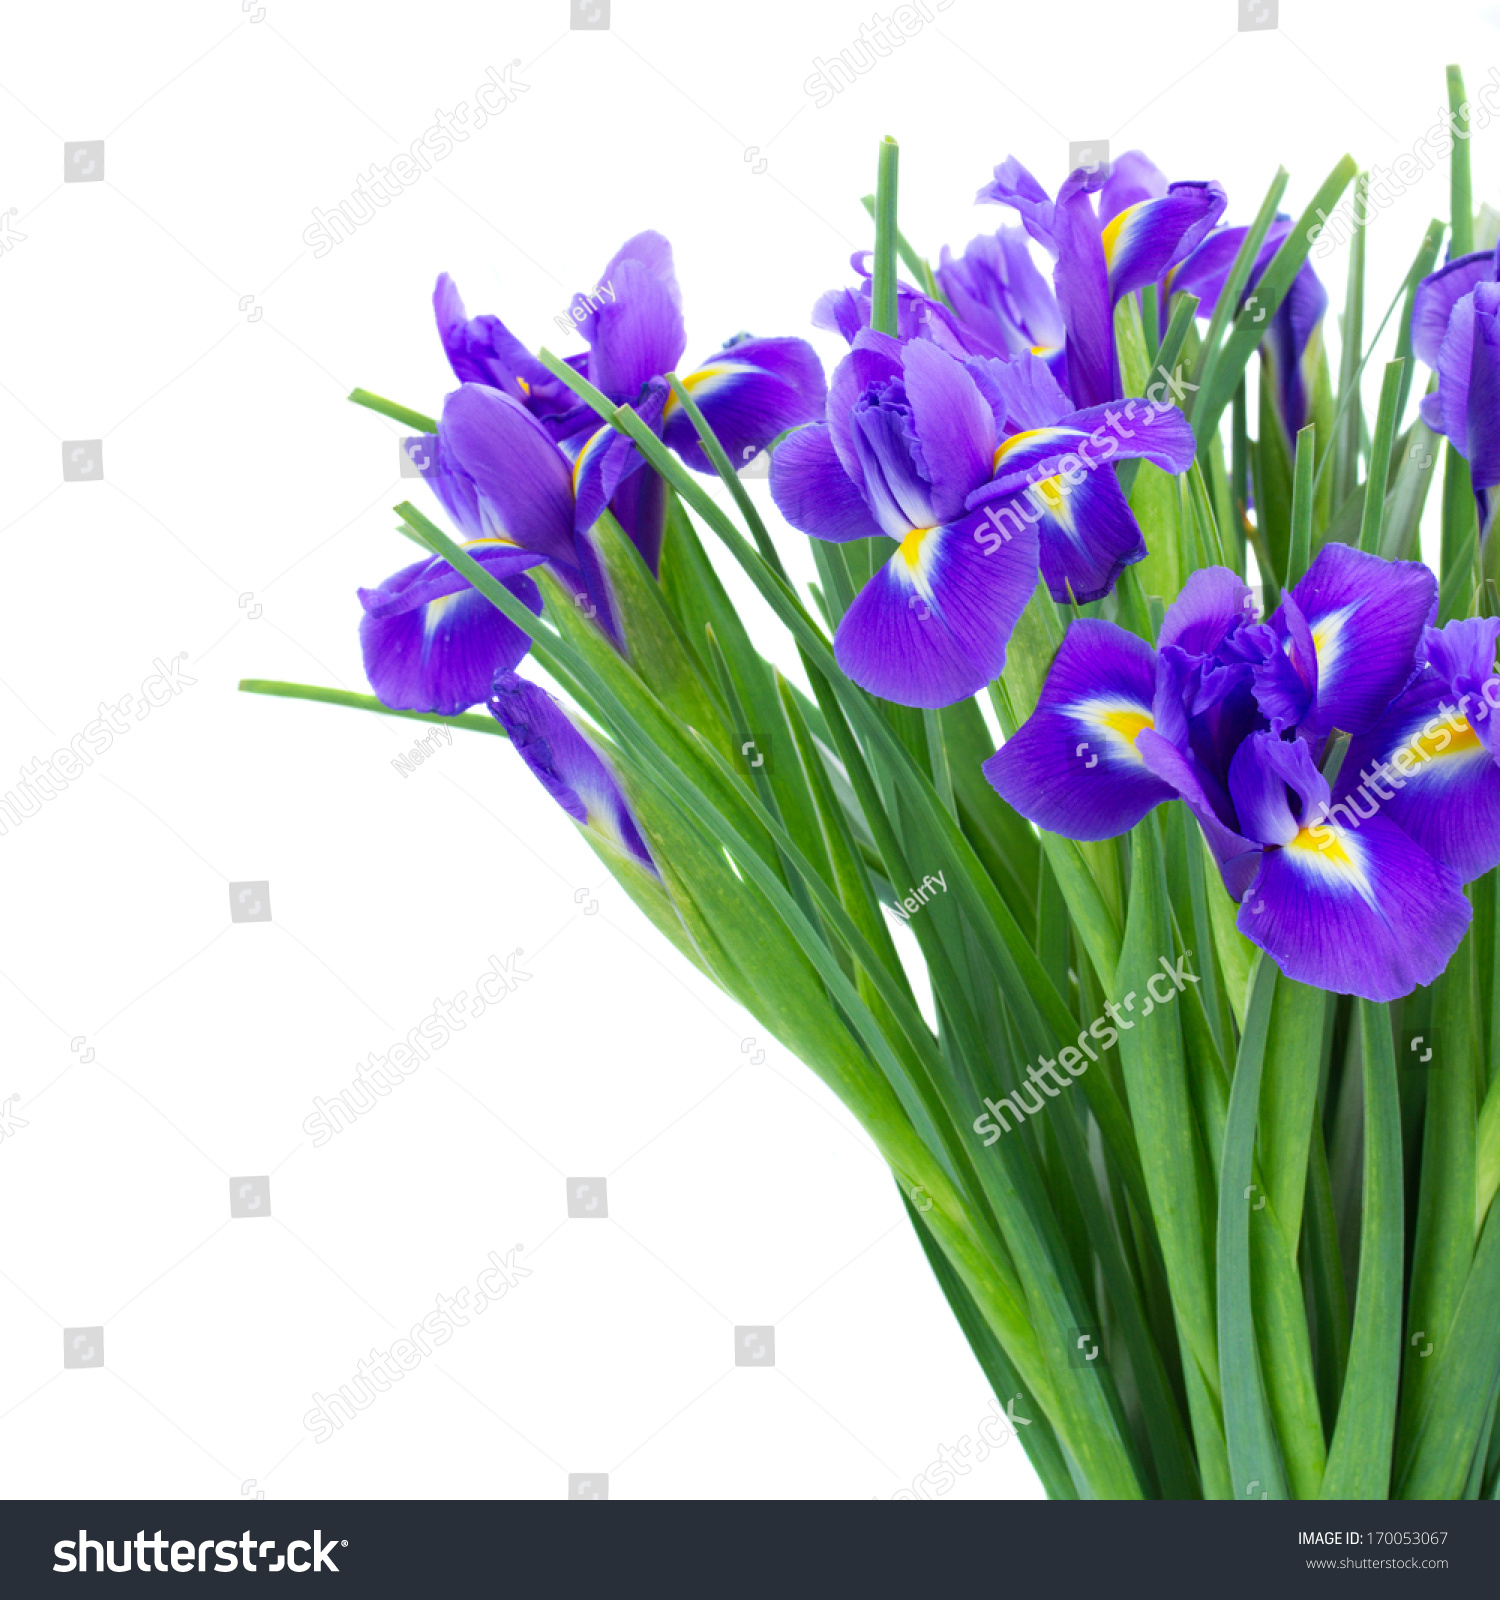 bunch of blue  irises flower close up  isolated on white background #170053067